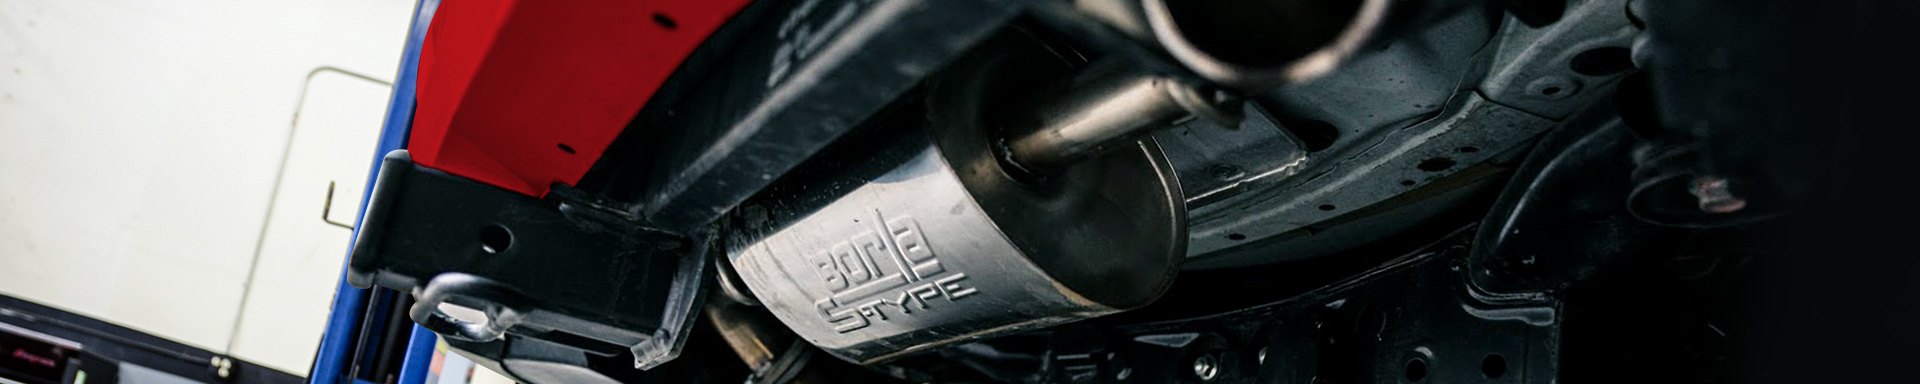 S-Type Stainless Steel Performance Exhaust by Borla for New Subaru Impreza